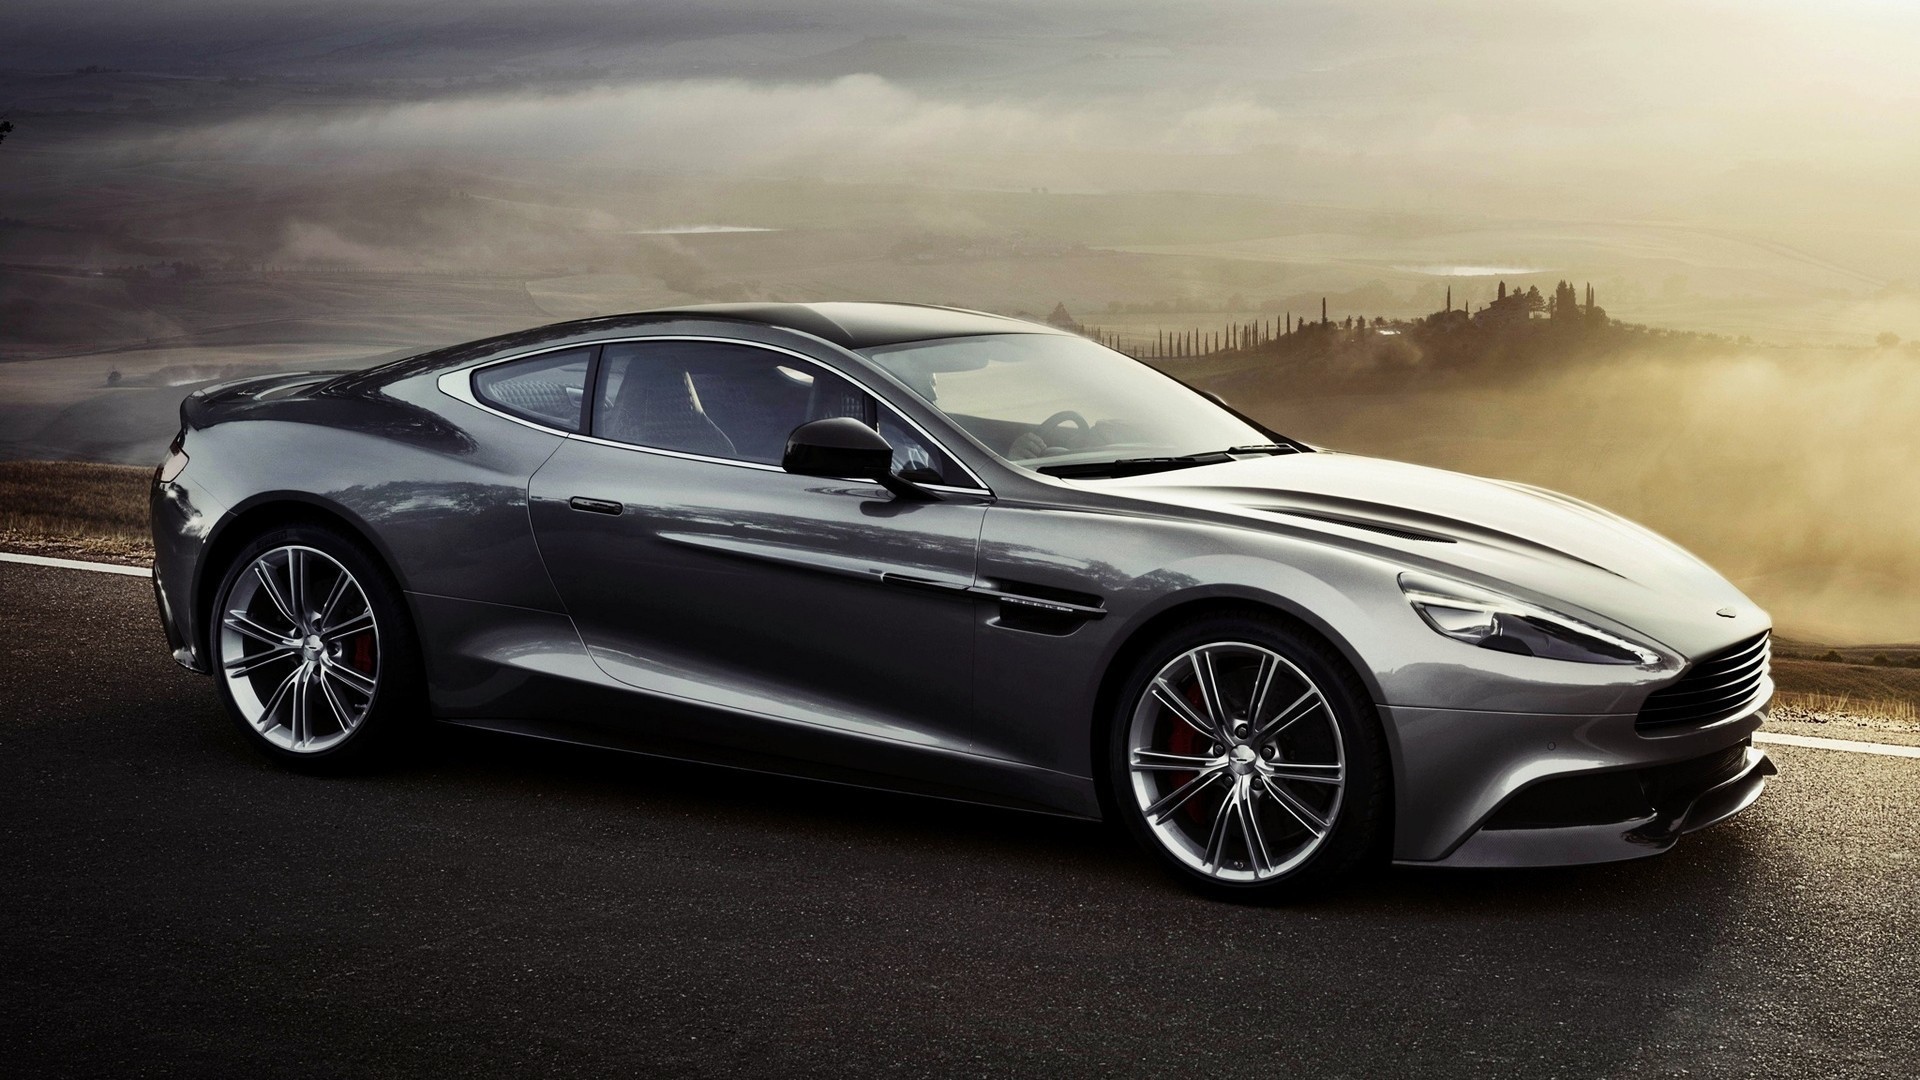 Dark gray Aston Martin on the background of the misty valley